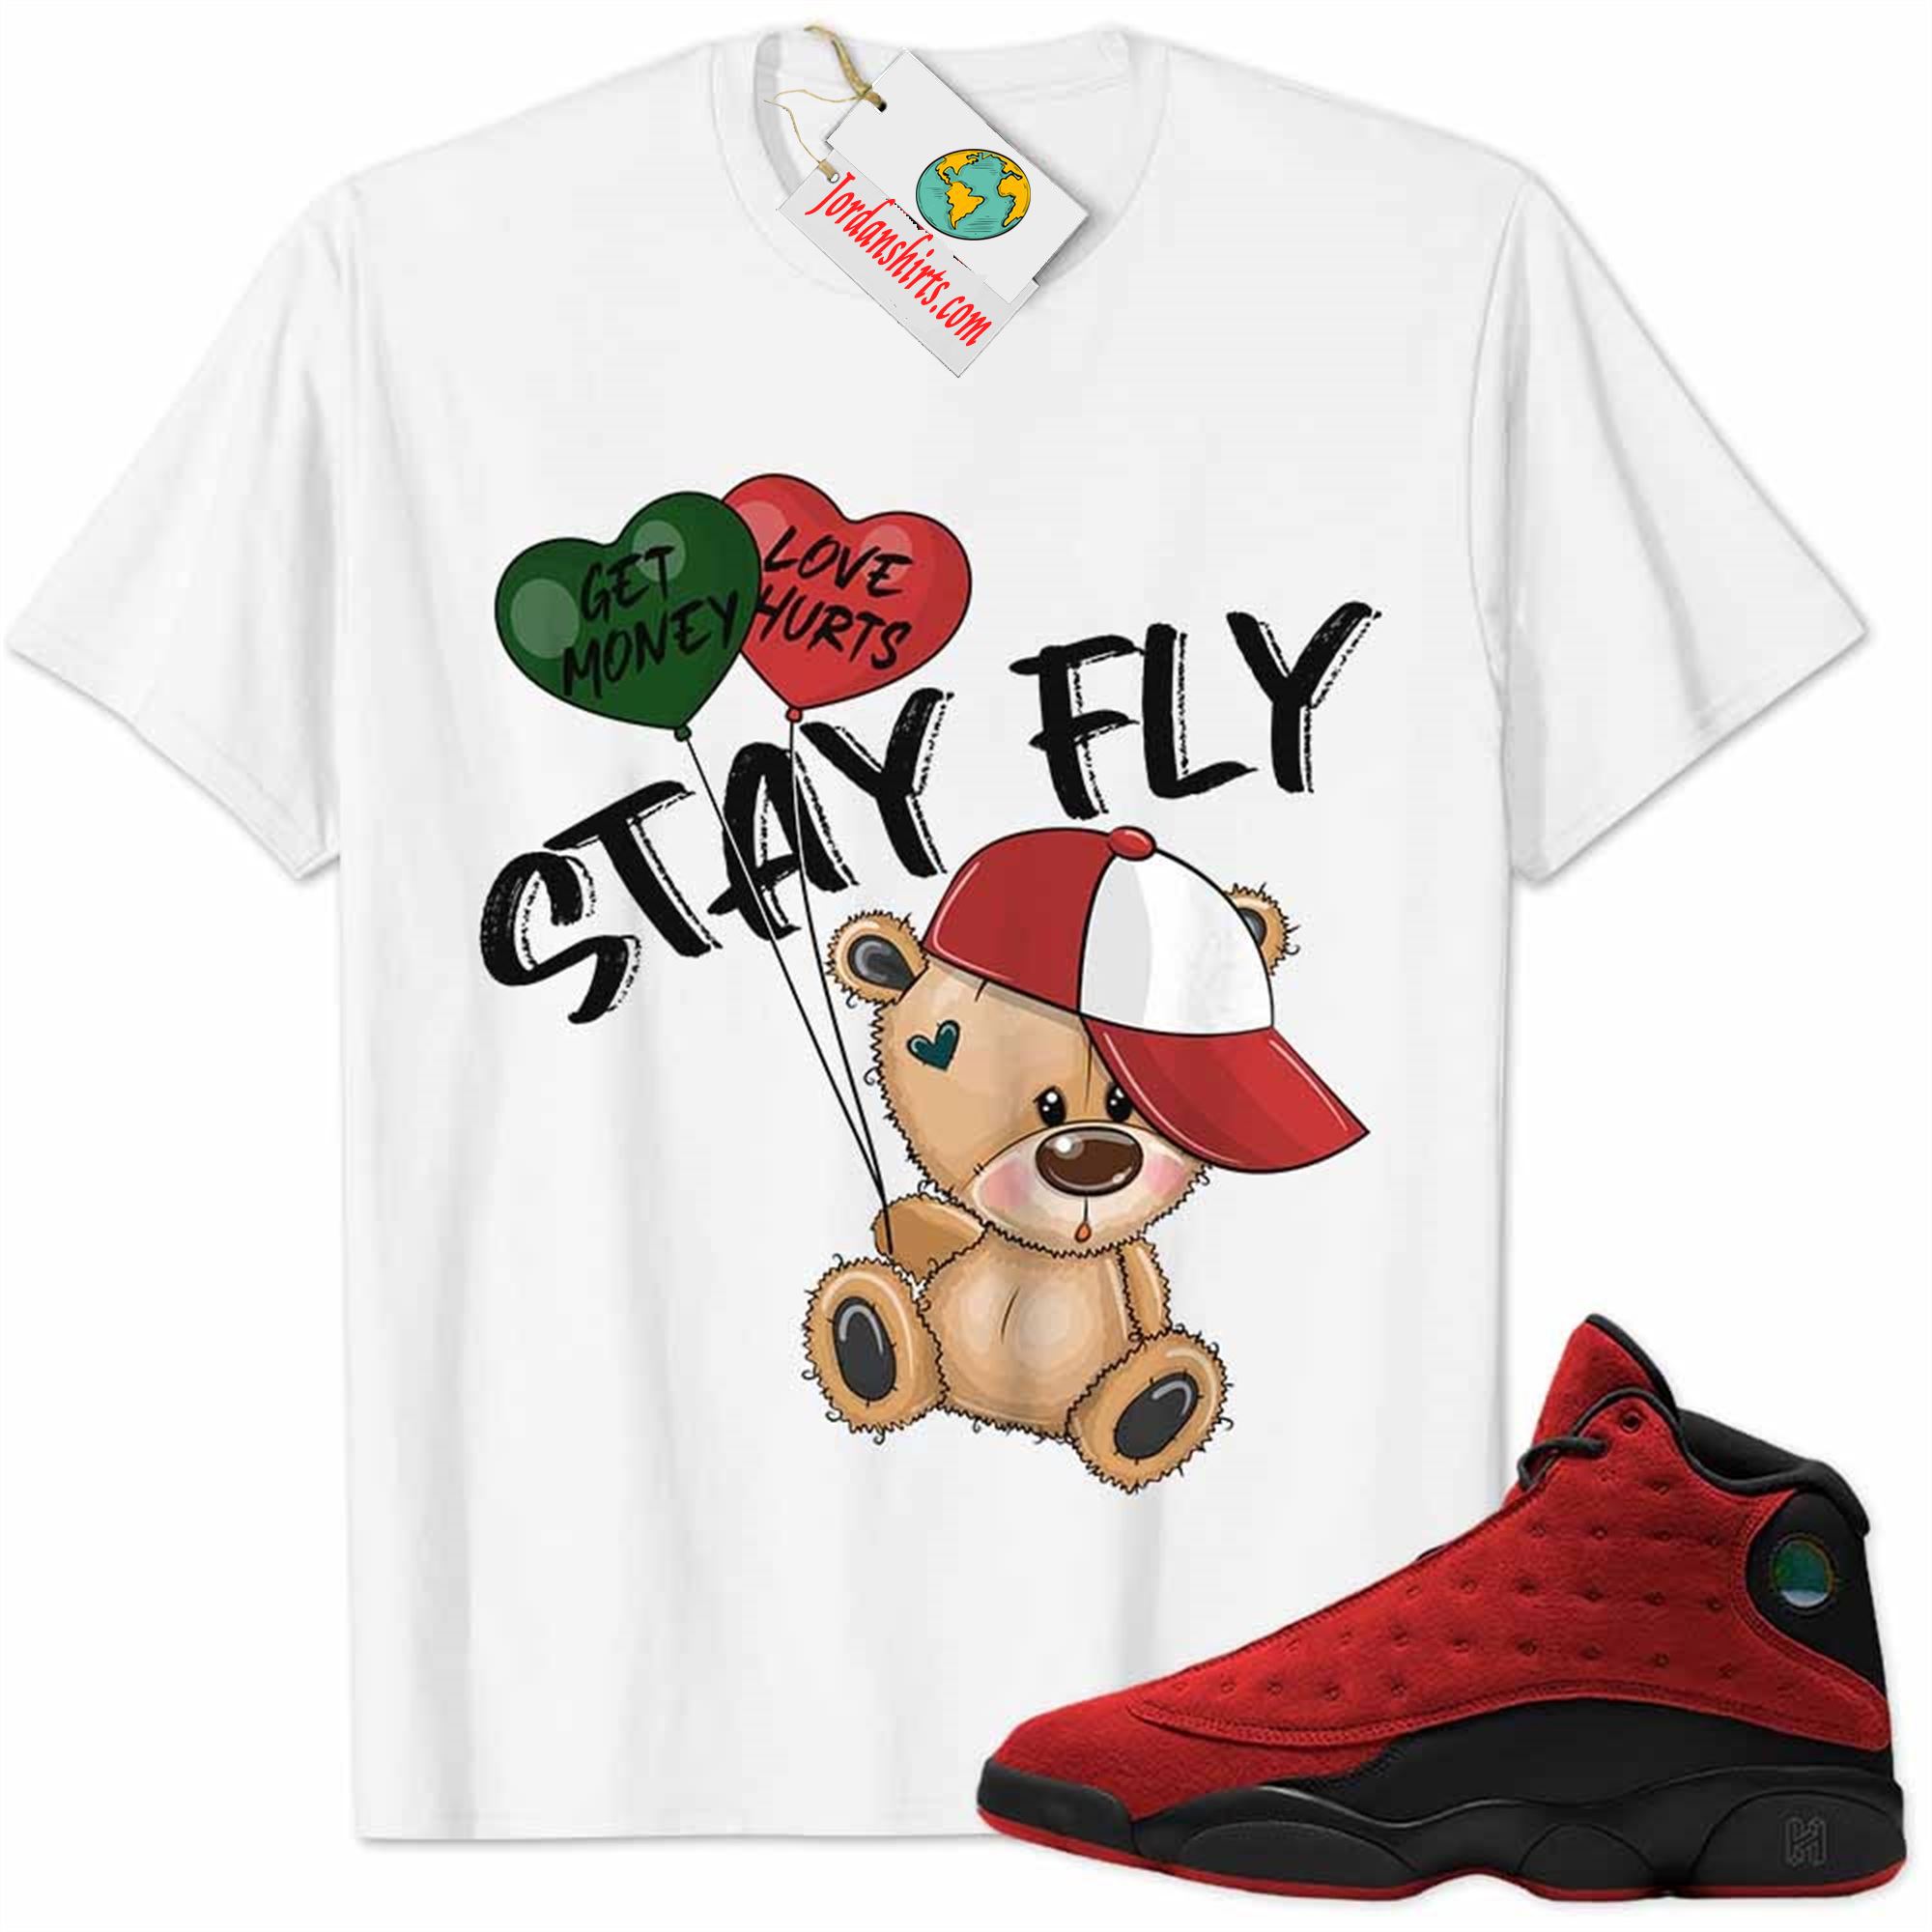 Jordan 13 Shirt, Reverse Bred 13s Shirt Cute Teddy Bear Stay Fly Get Money White Plus Size Up To 5xl